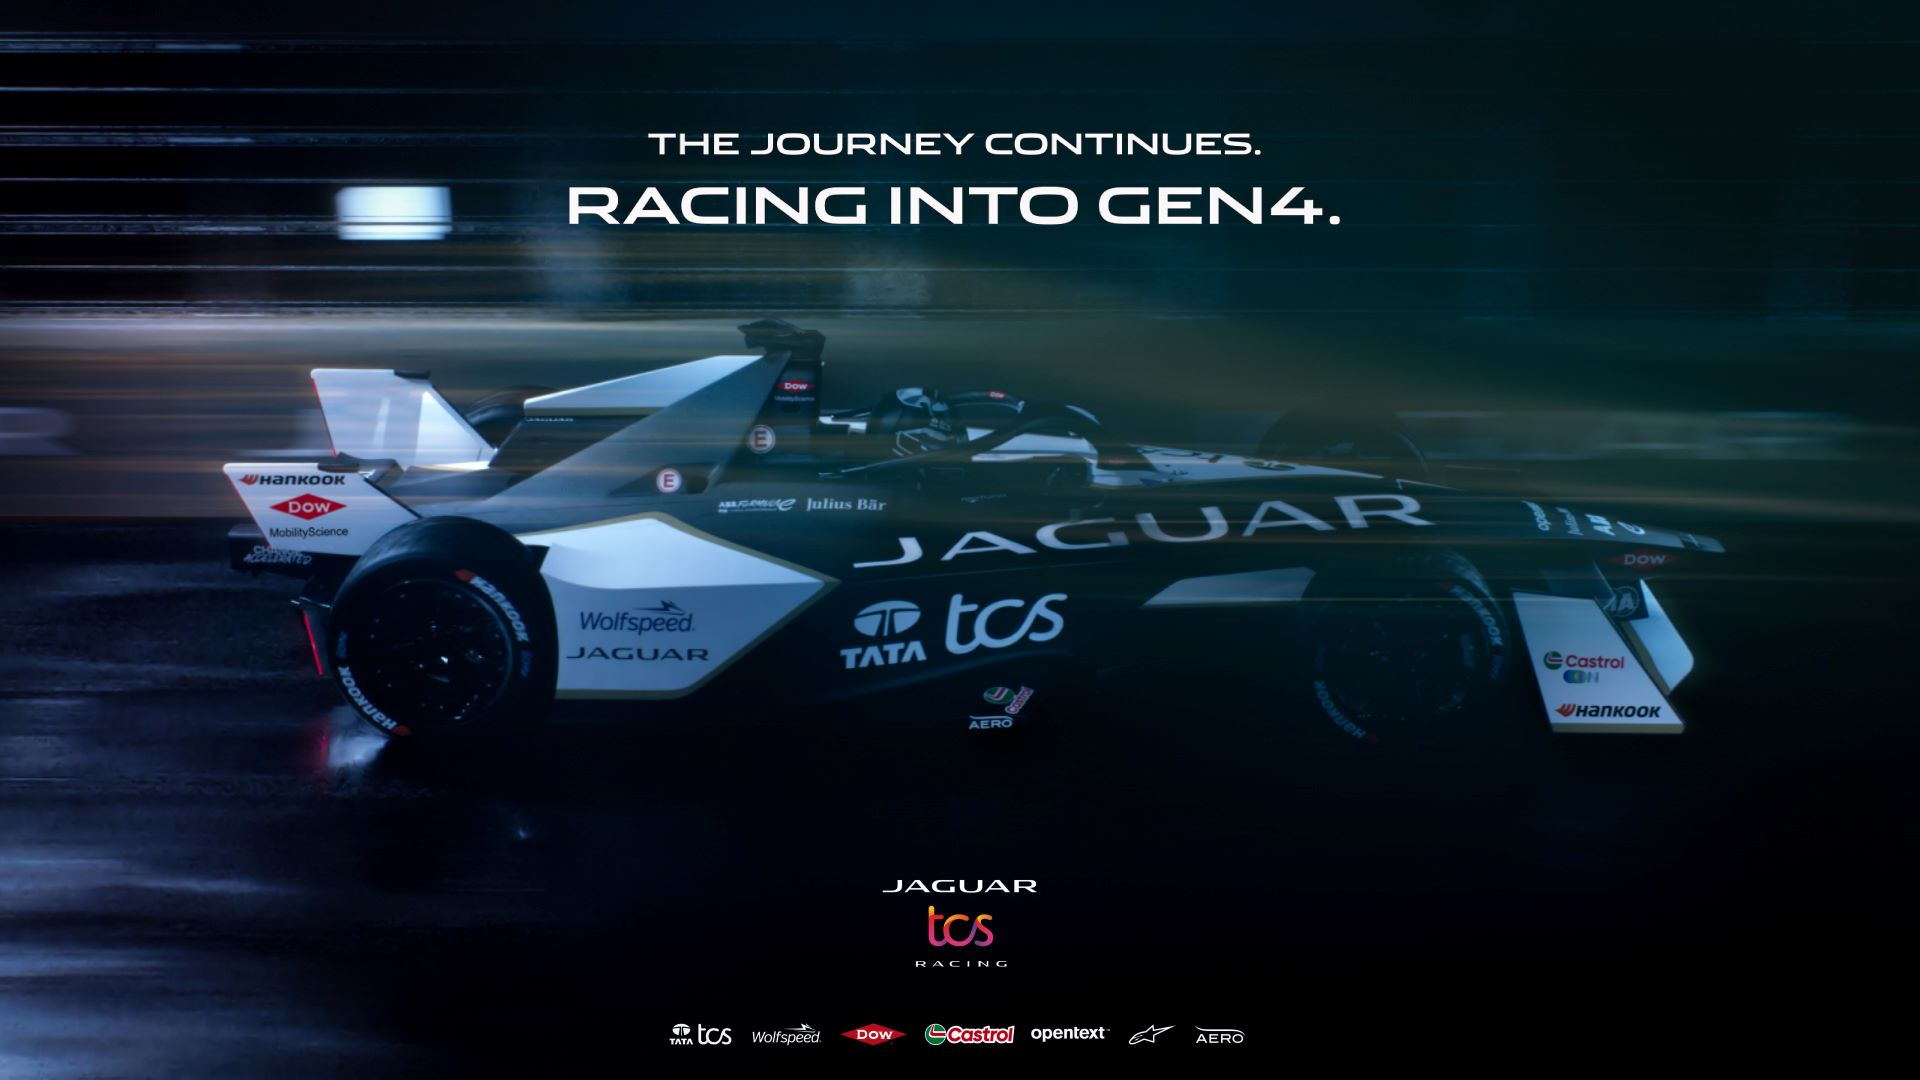 Jaguar TCS Racing Reinforces Commitment to Formula E’s GEN4 Era